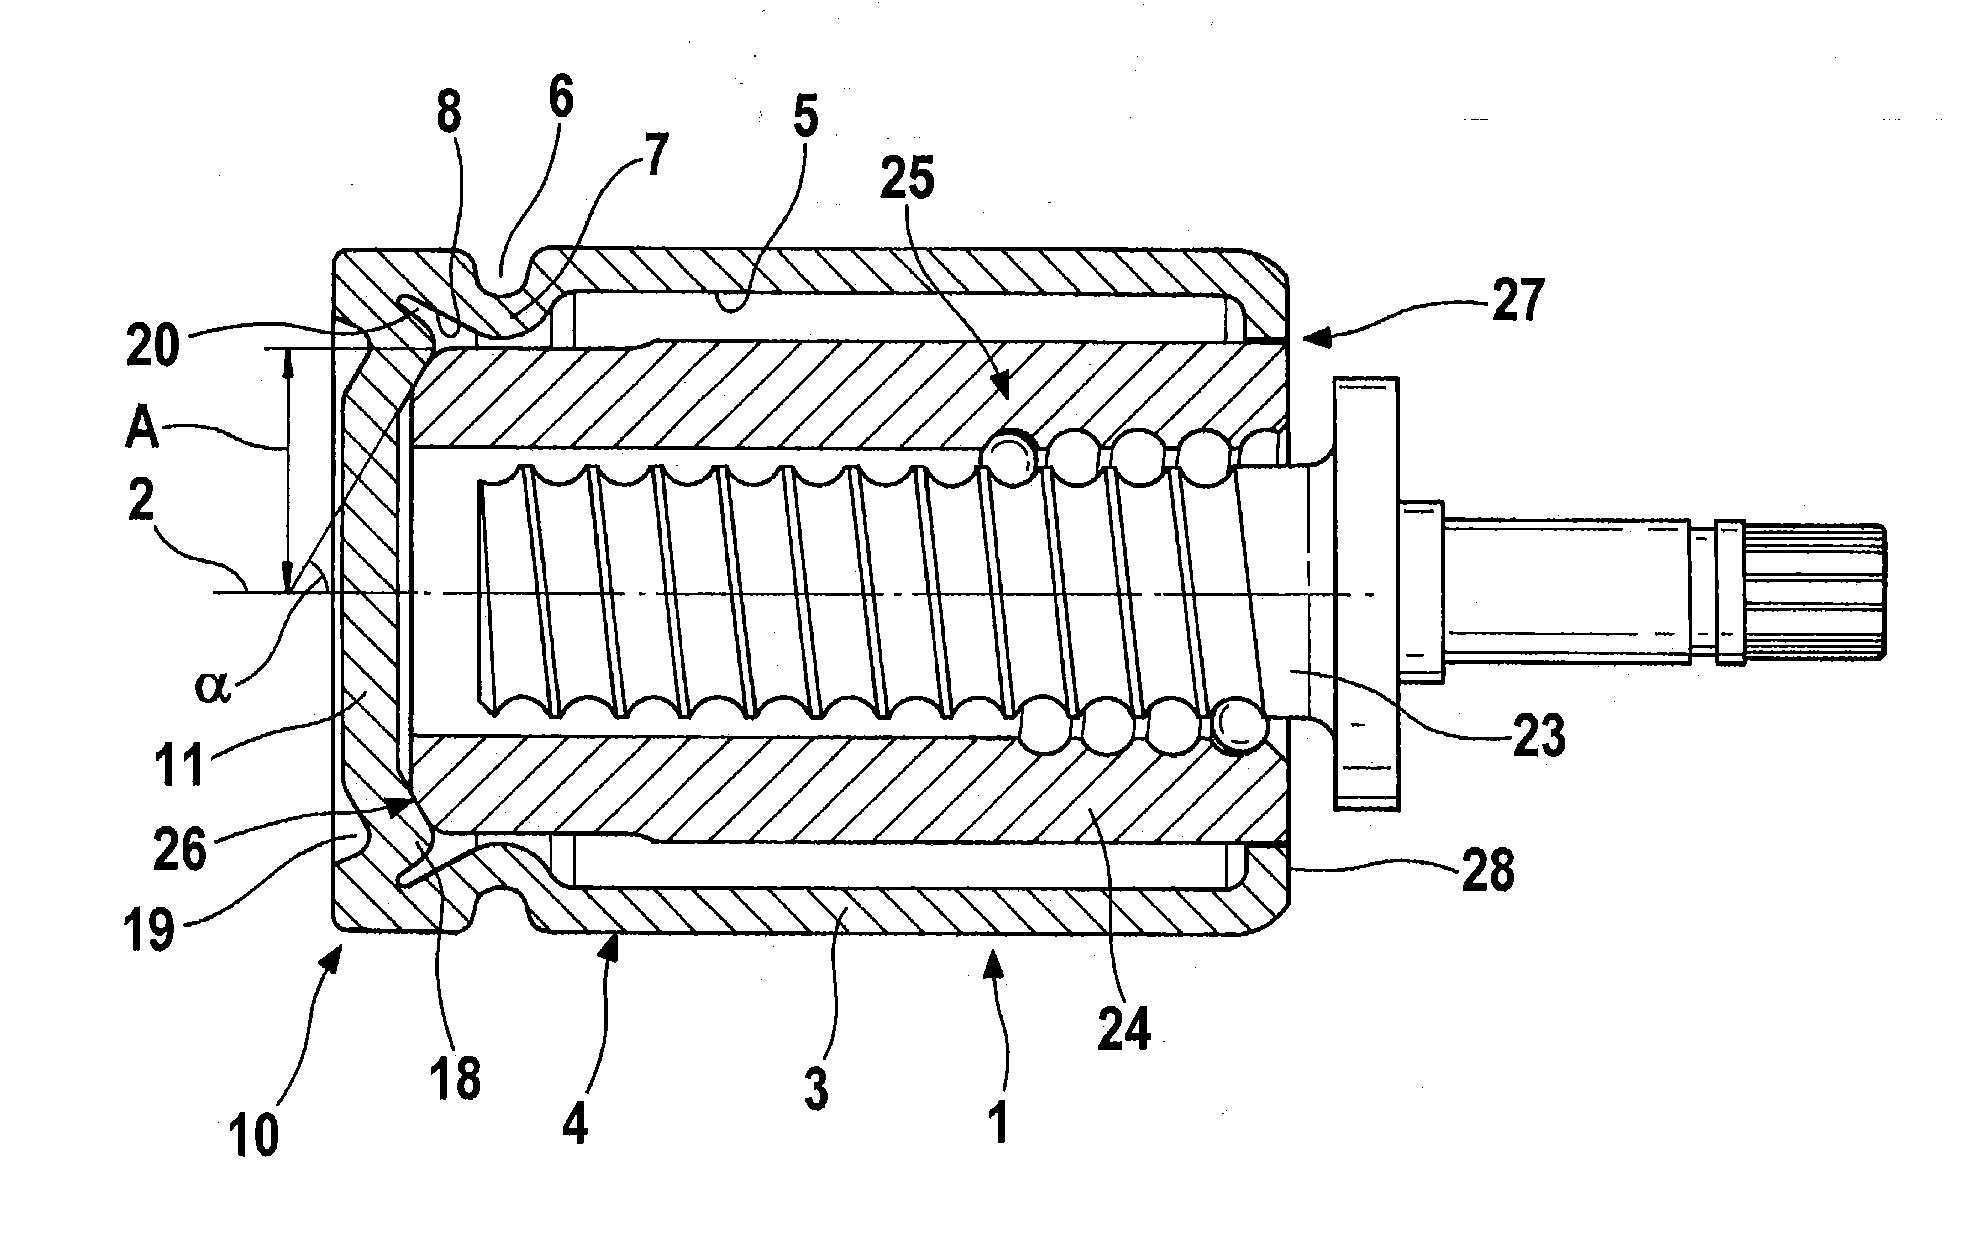 Multi-part piston construction for a brake caliper of a disk brake